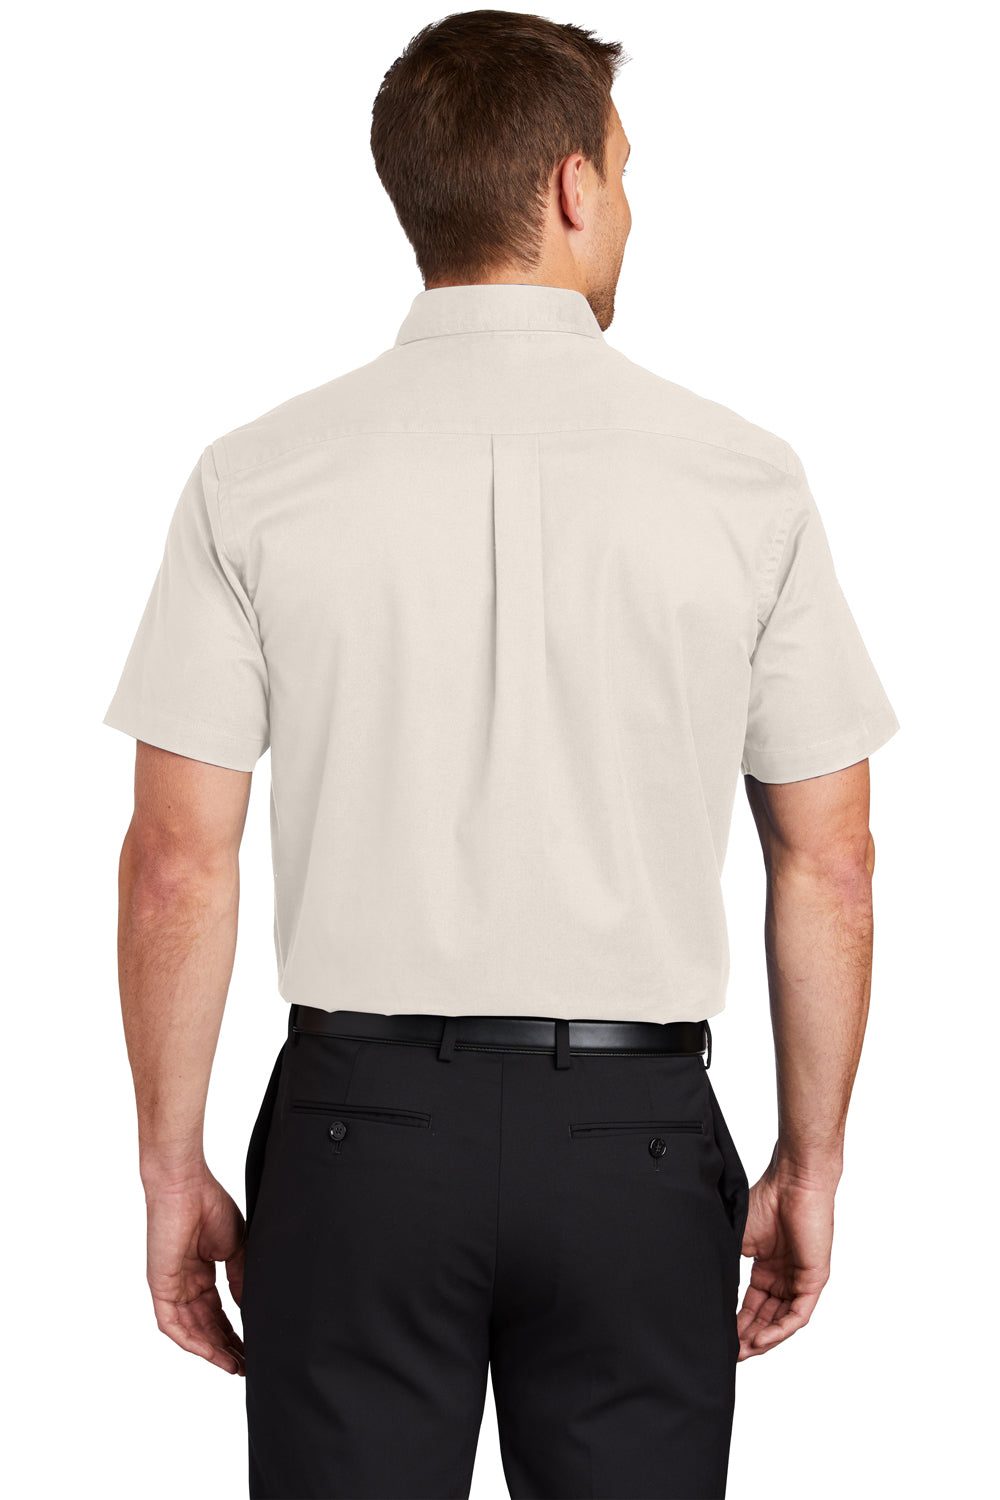 Port Authority S508/TLS508 Mens Easy Care Wrinkle Resistant Short Sleeve Button Down Shirt w/ Pocket Light Stone Back